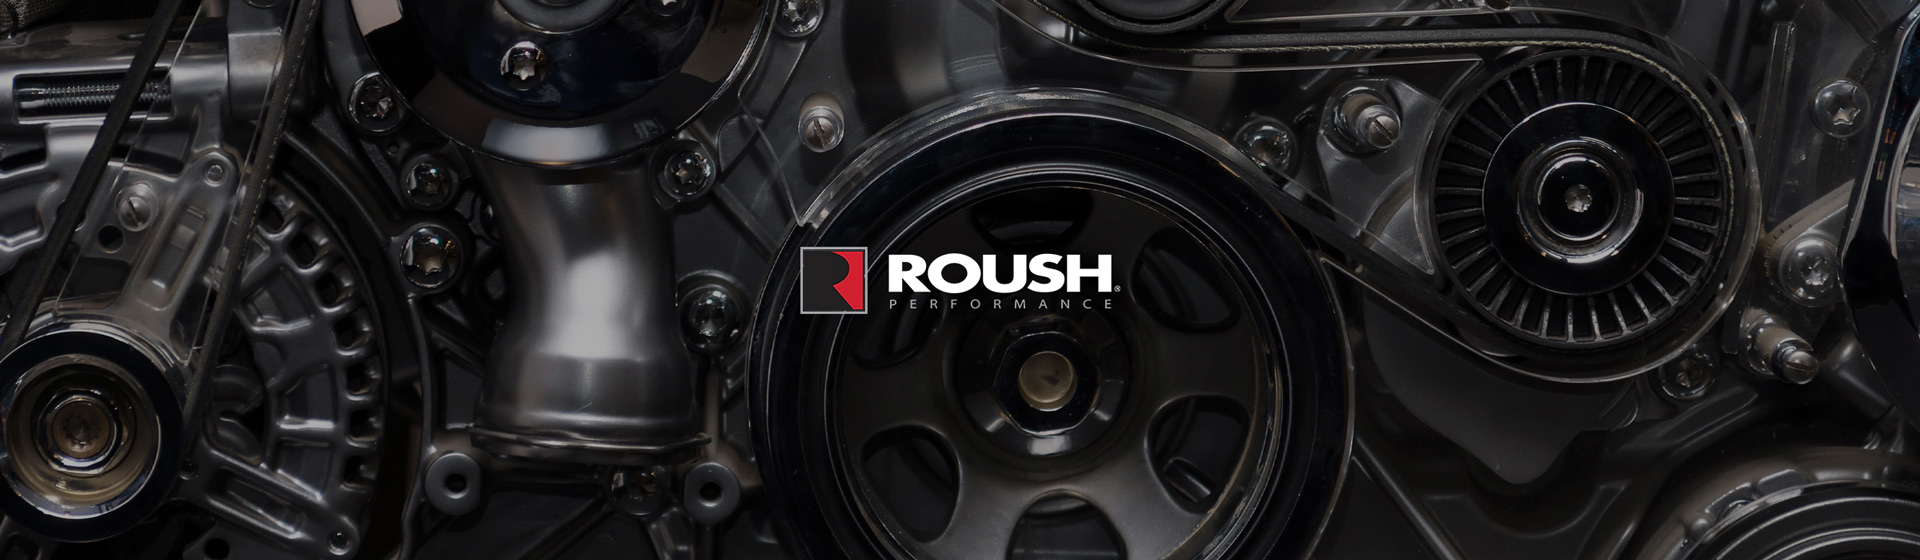 Roush Performance logo